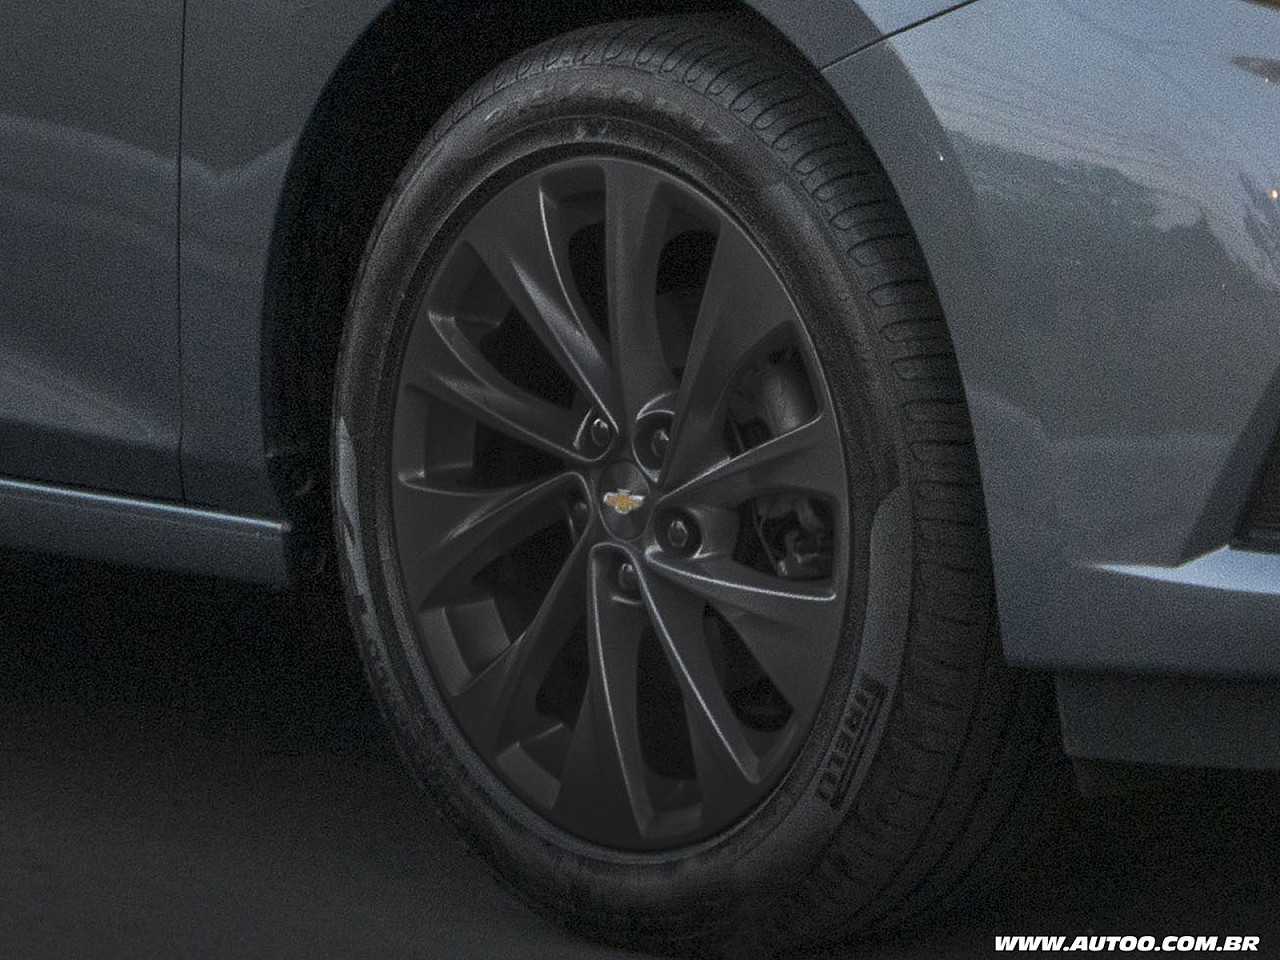 ChevroletCruze 2019 - rodas